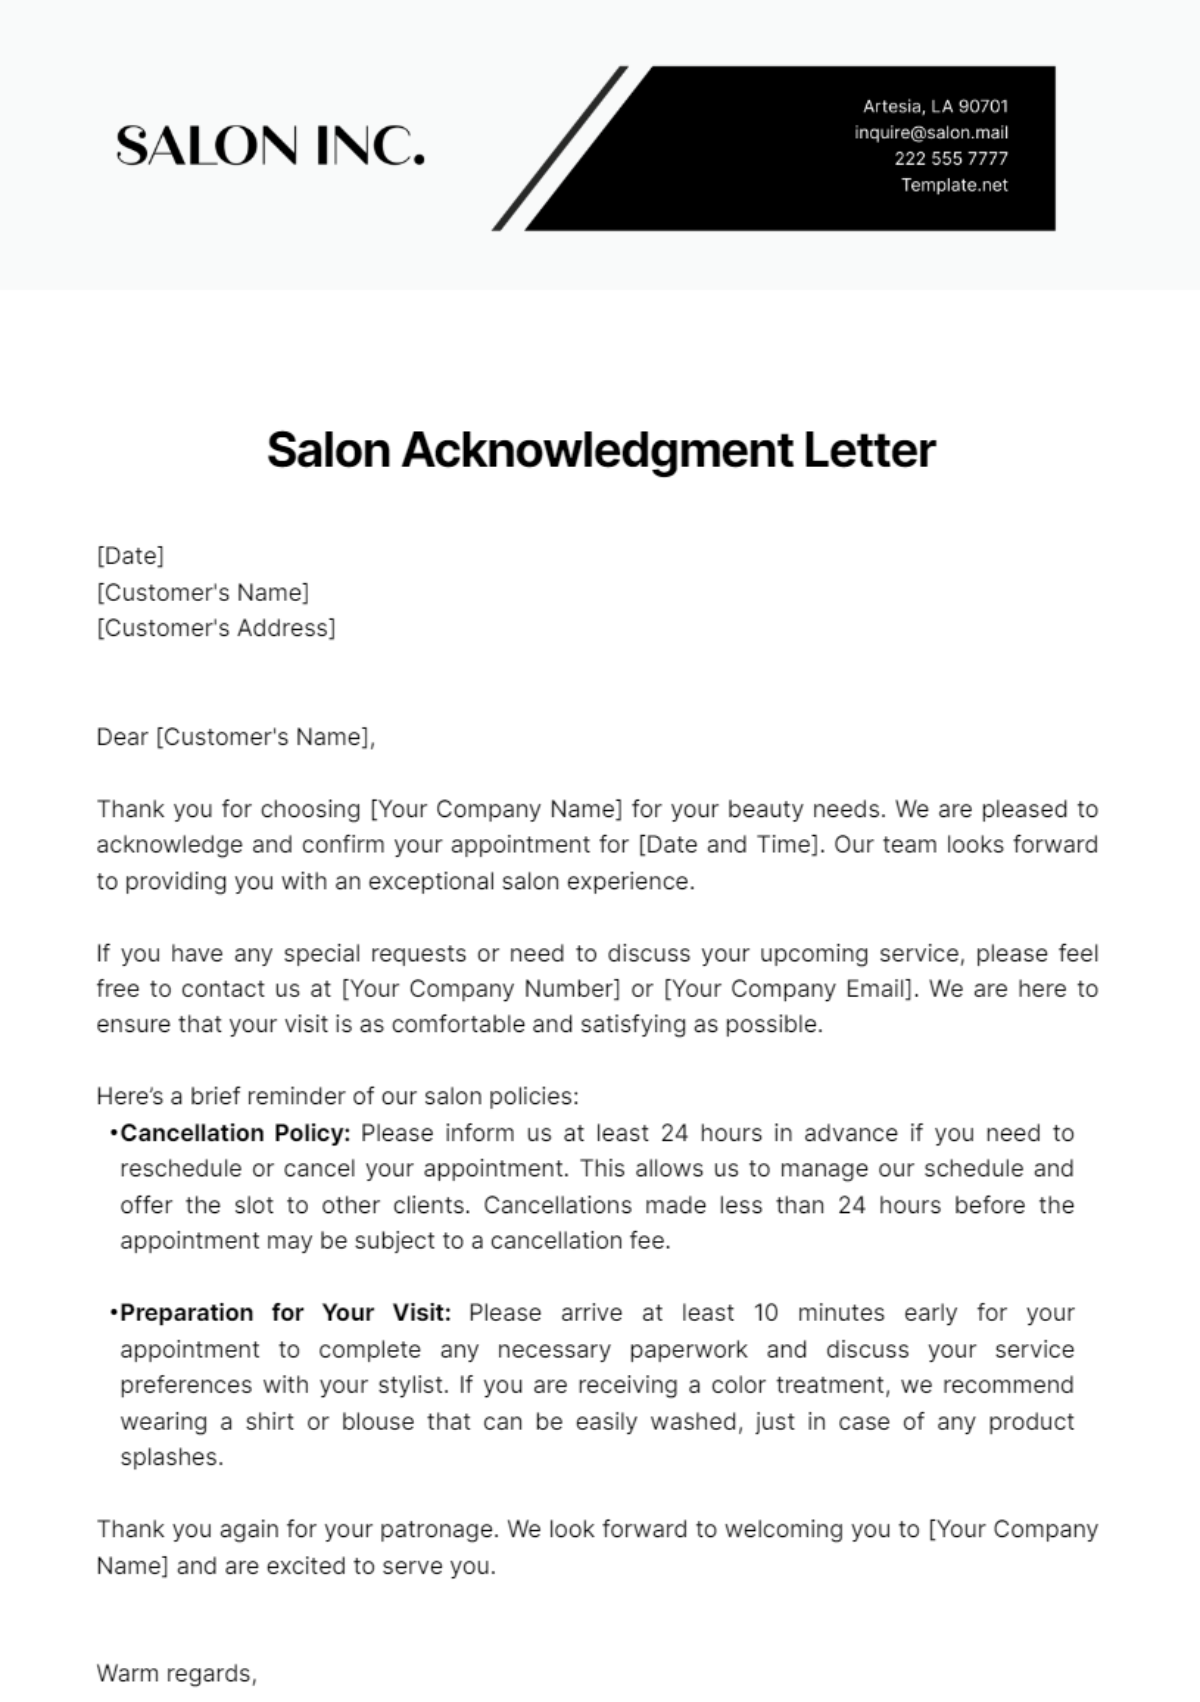 Salon Acknowledgment Letter Template